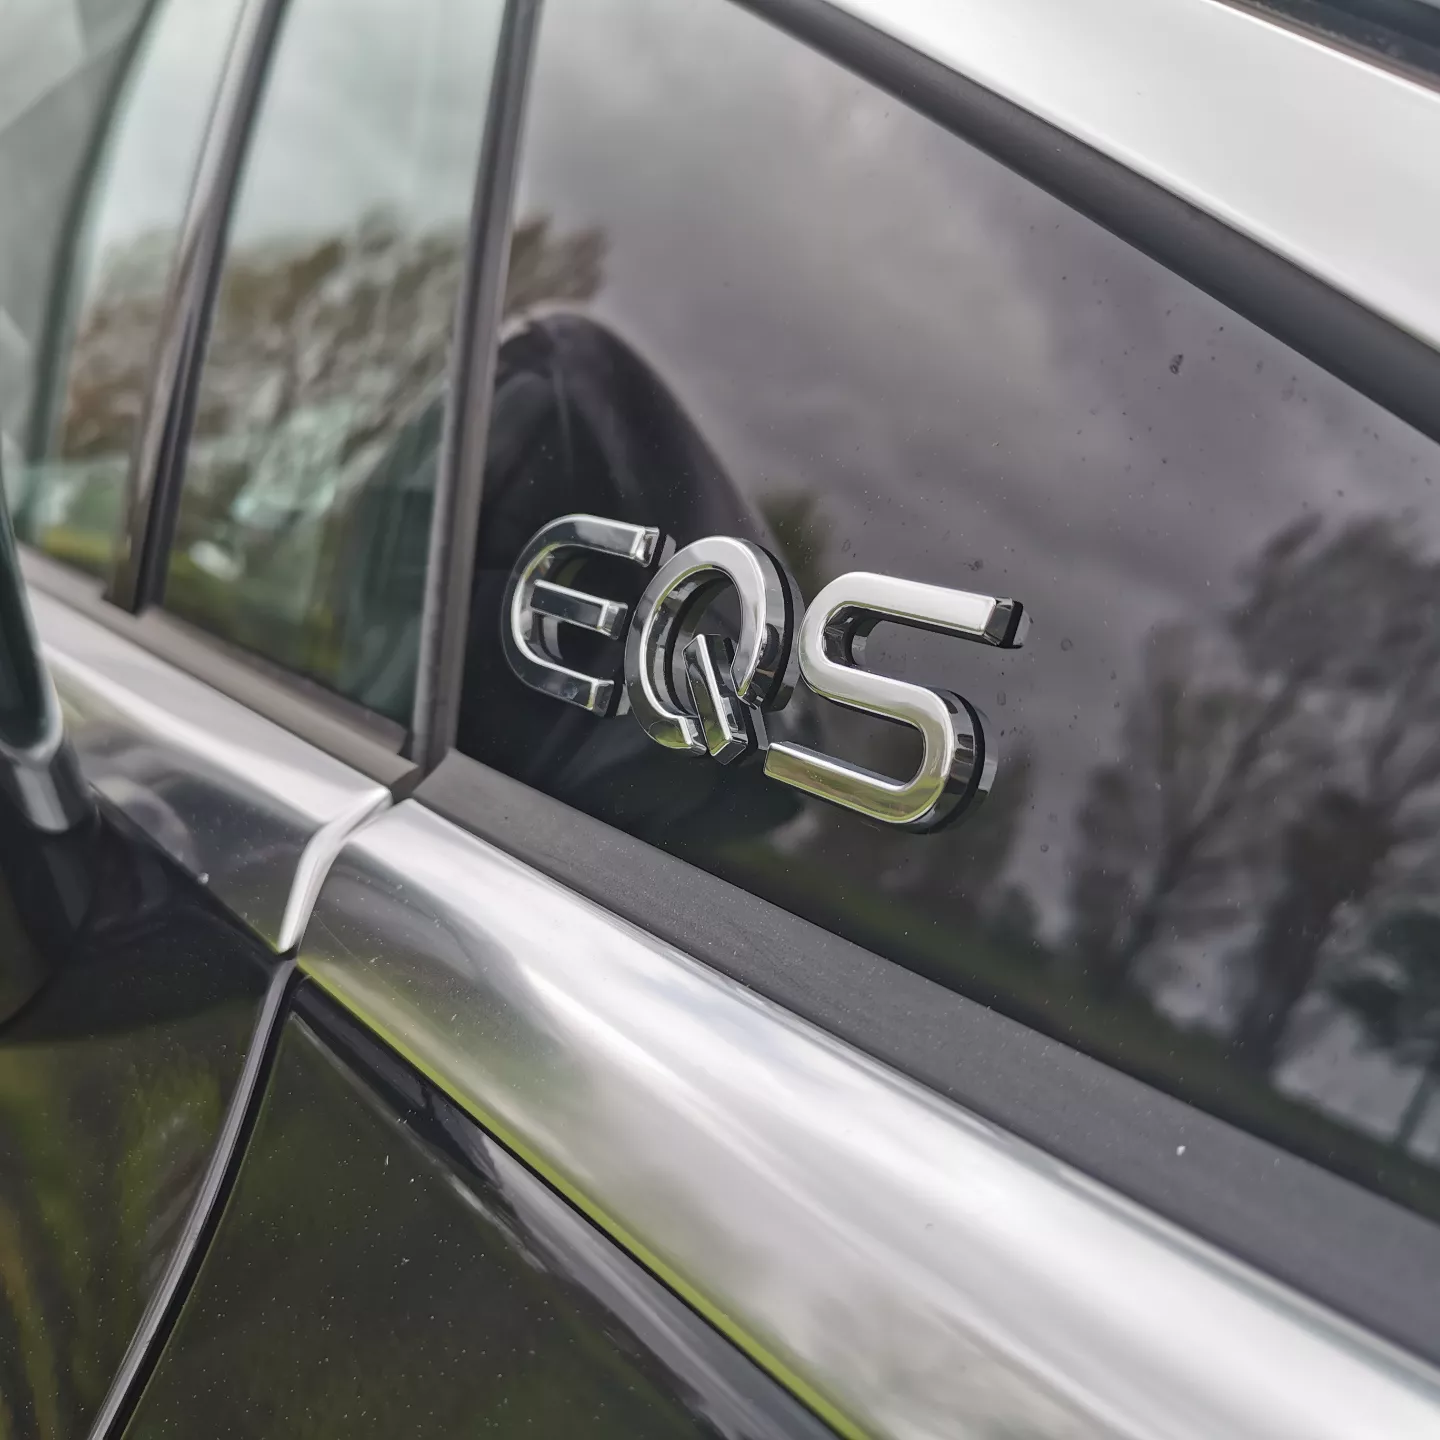 Mercedes-AMG EQS 53 4MATIC+ review NZ